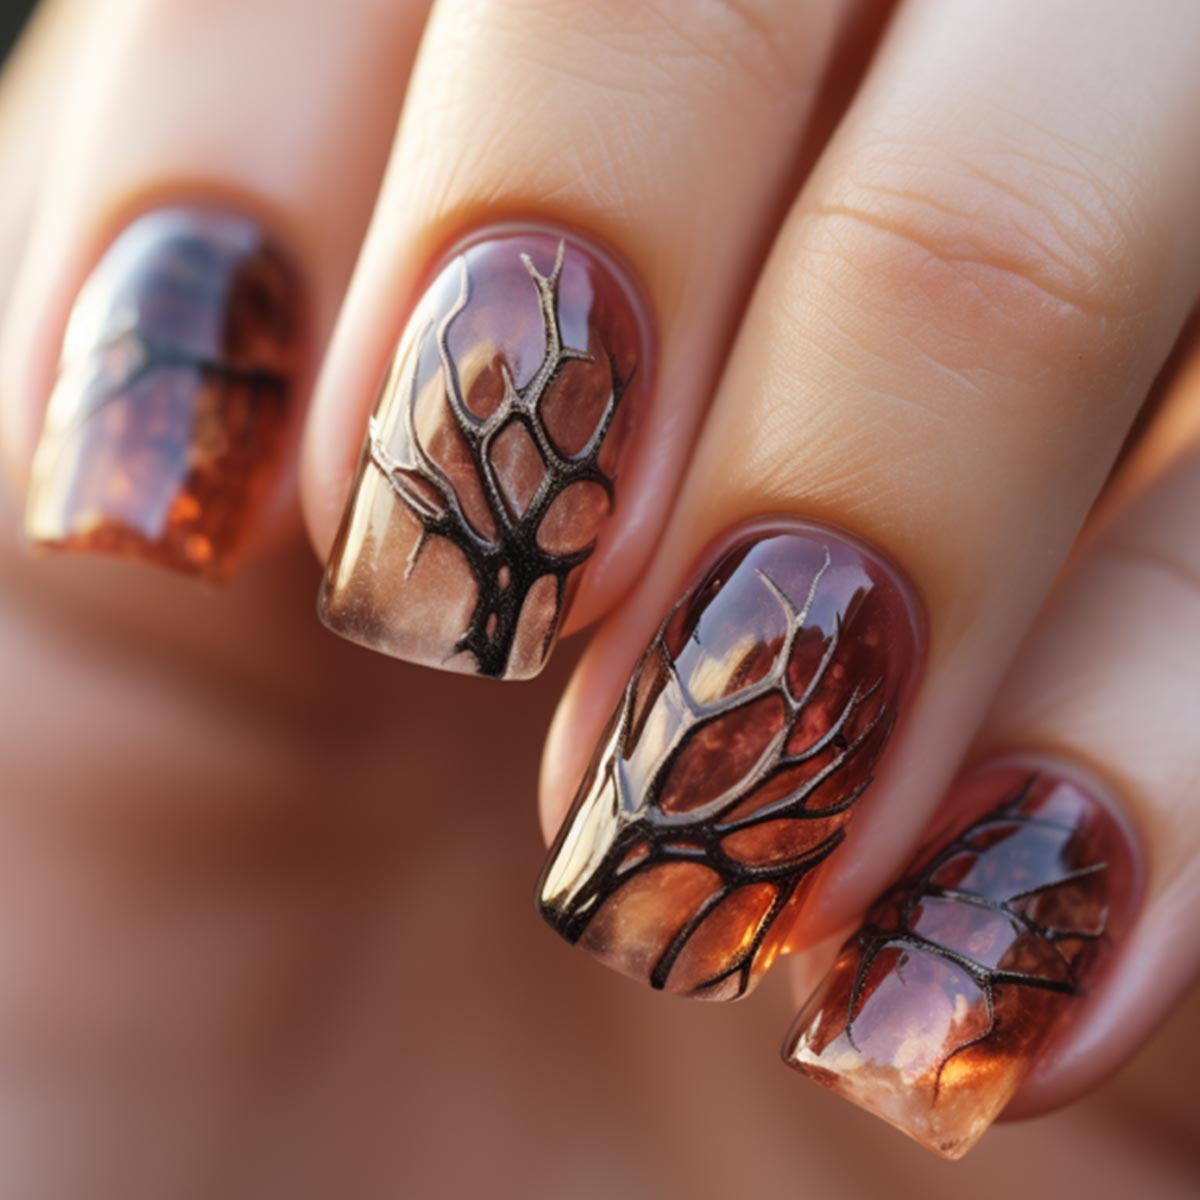 Halloween nail art idee unghie bellissime